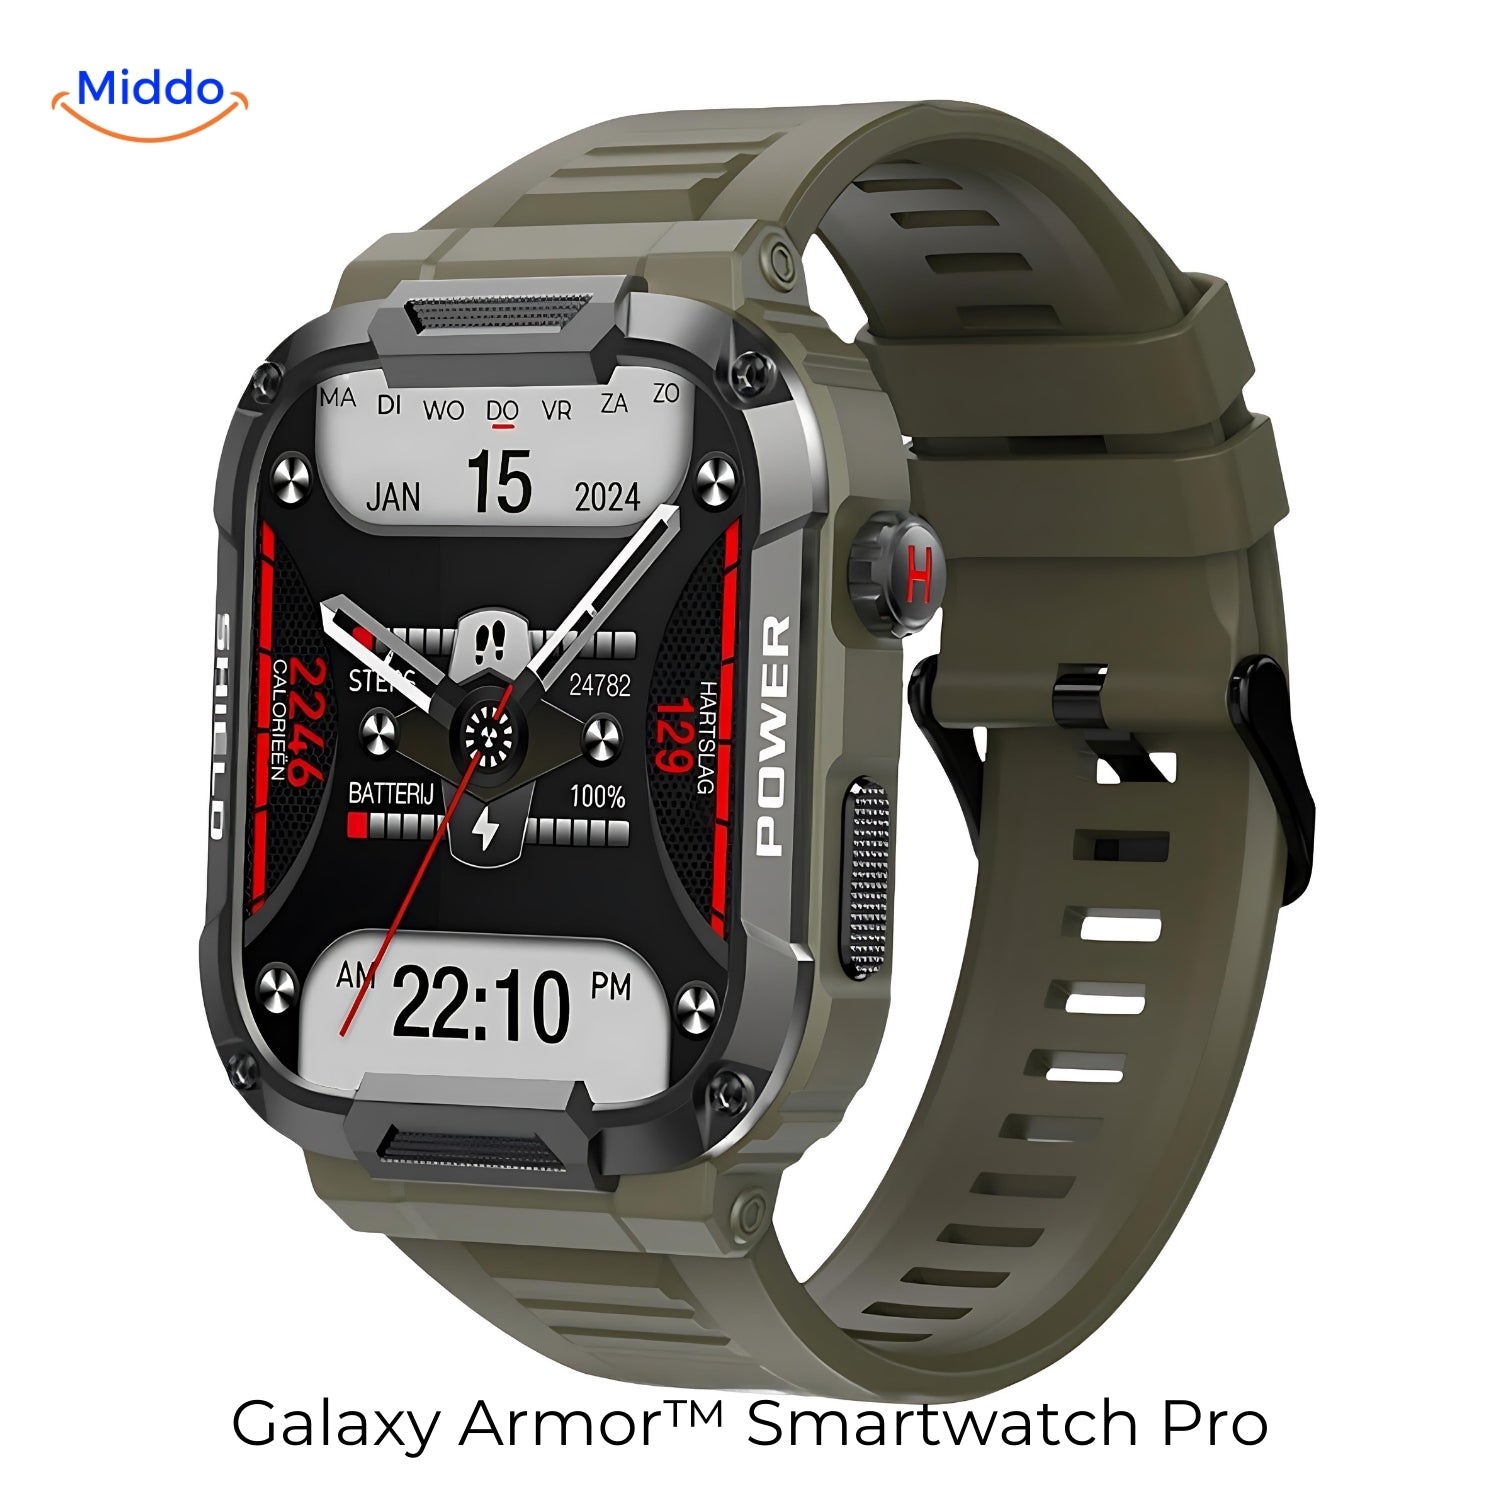 Galaxy Armor Smartwatch Pro voor IOS en Android legergroen www.middo.nl